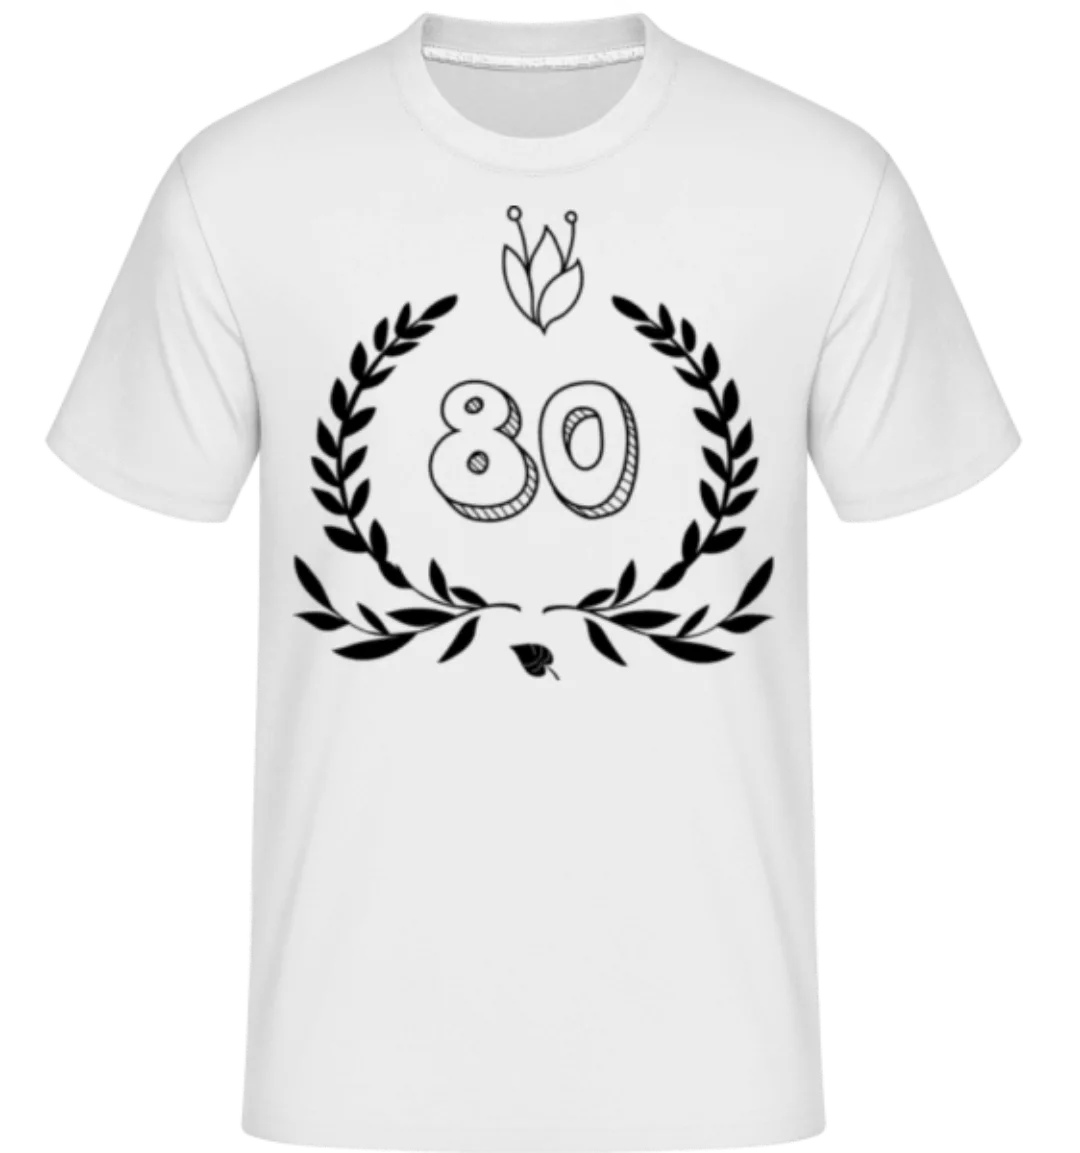 80er Geburtstag · Shirtinator Männer T-Shirt günstig online kaufen